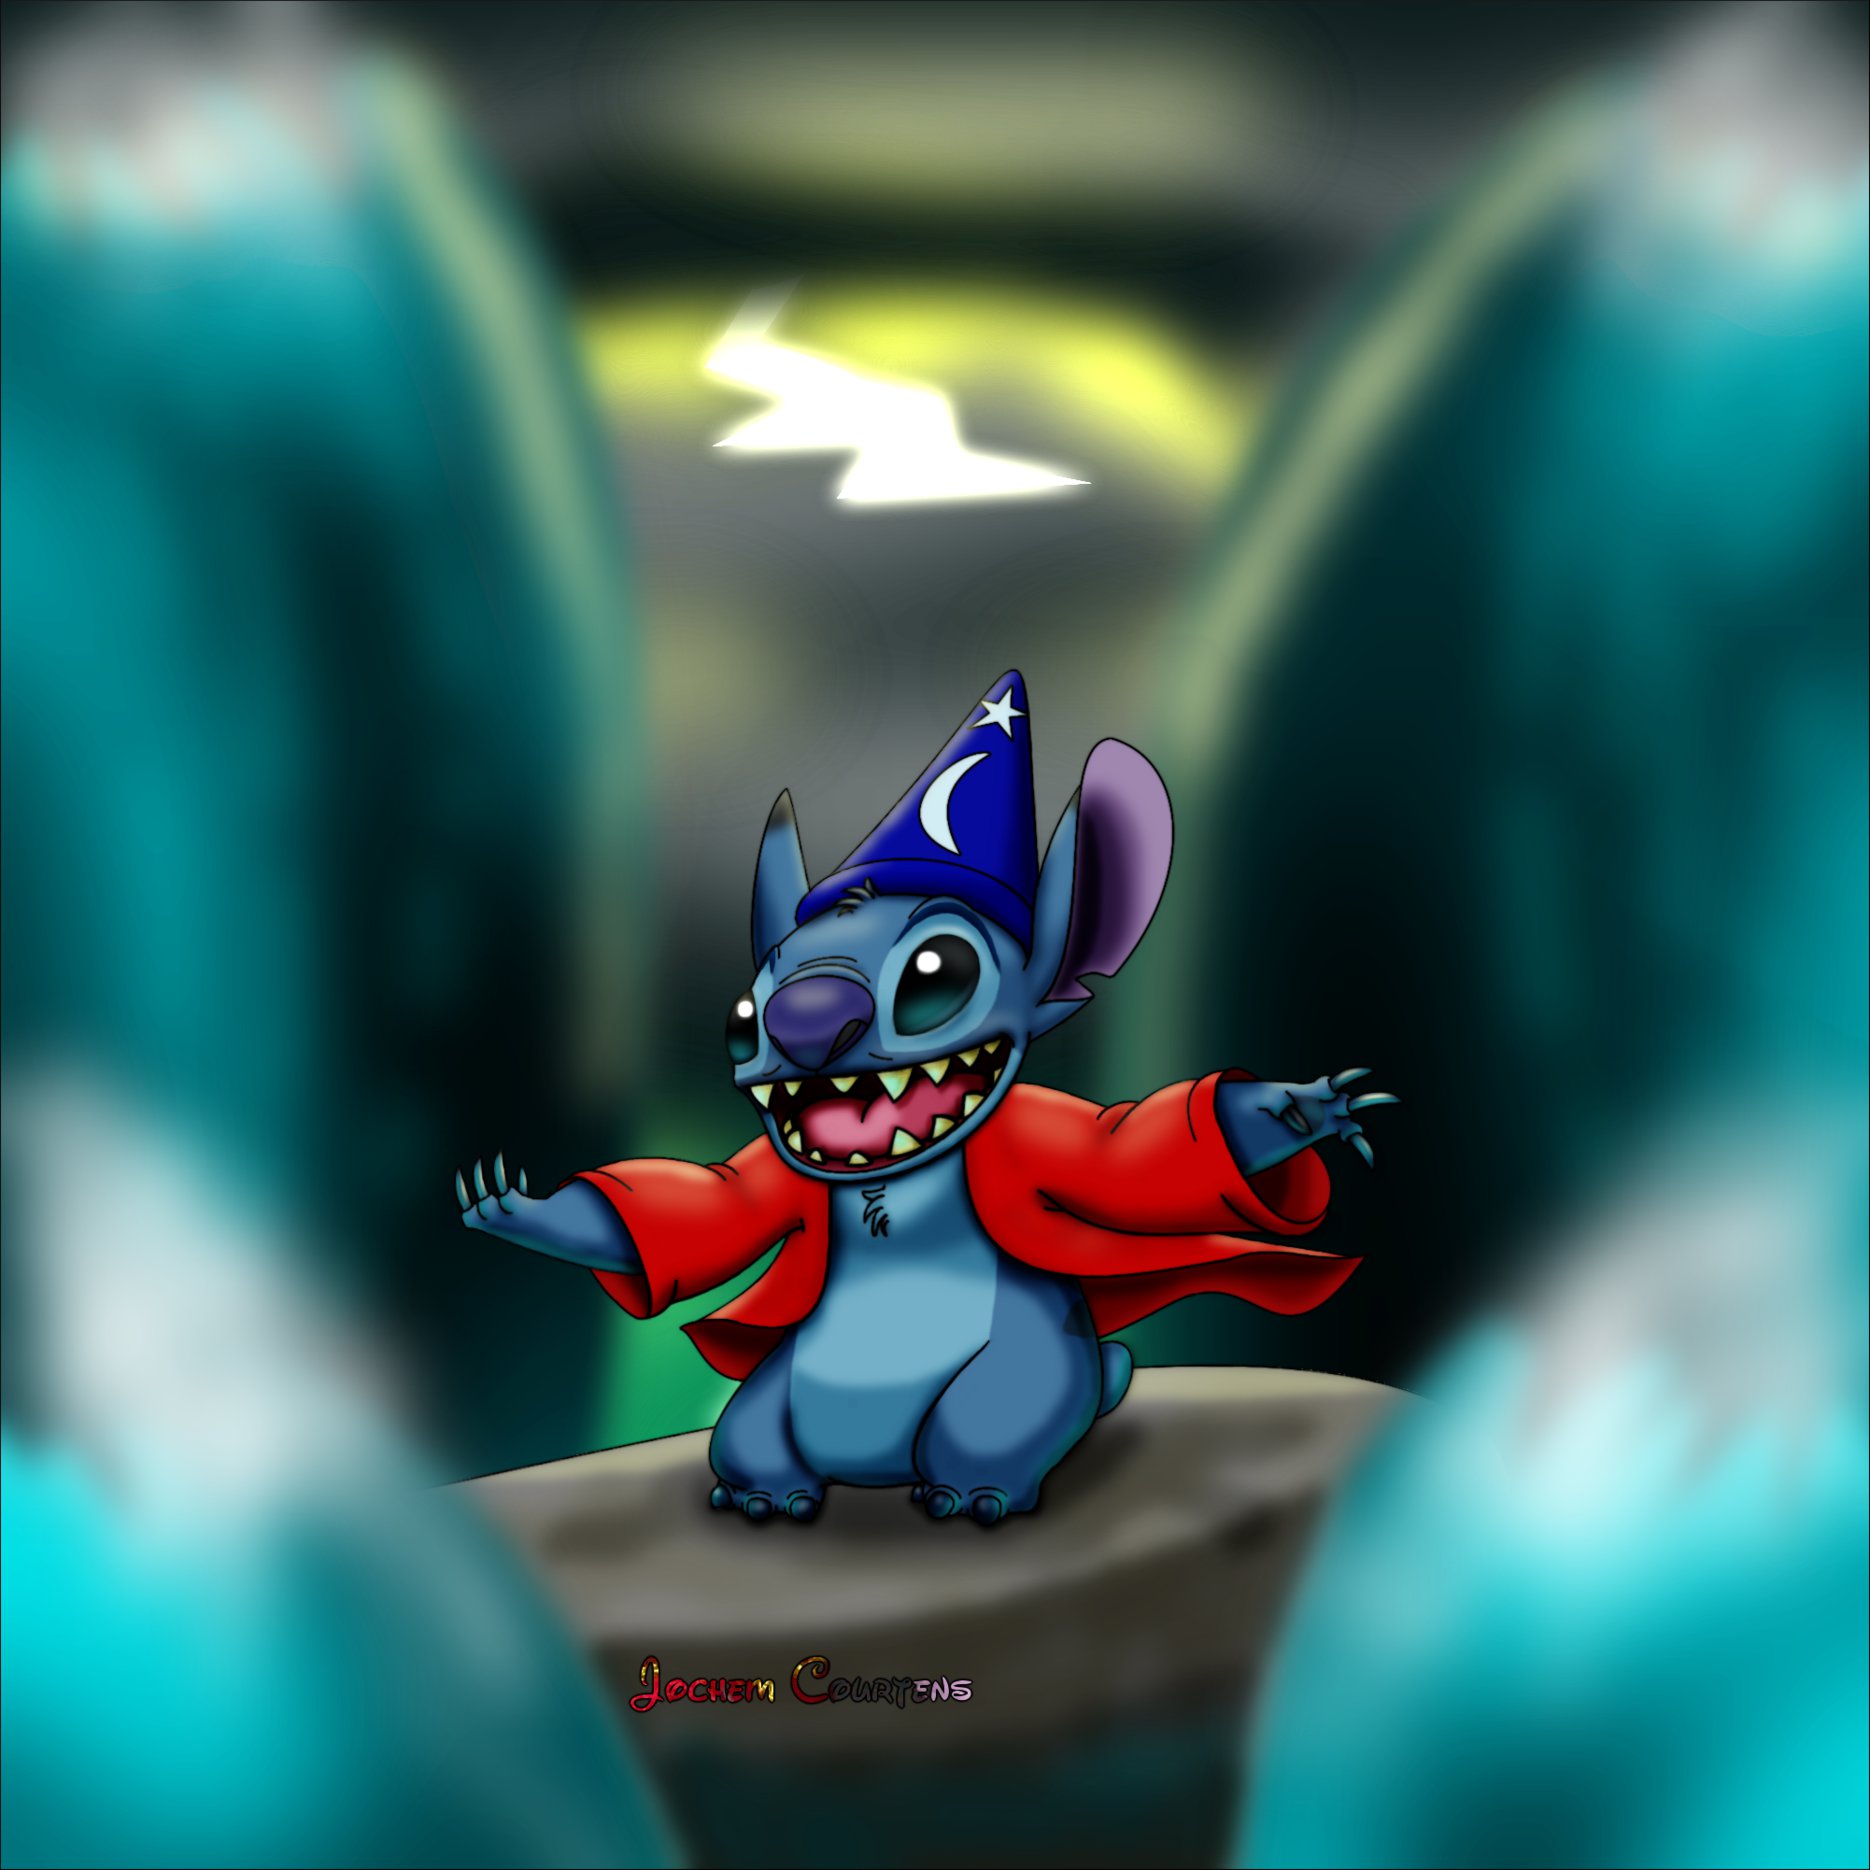 Fantasia's Stitch. by NeoseekerStitch